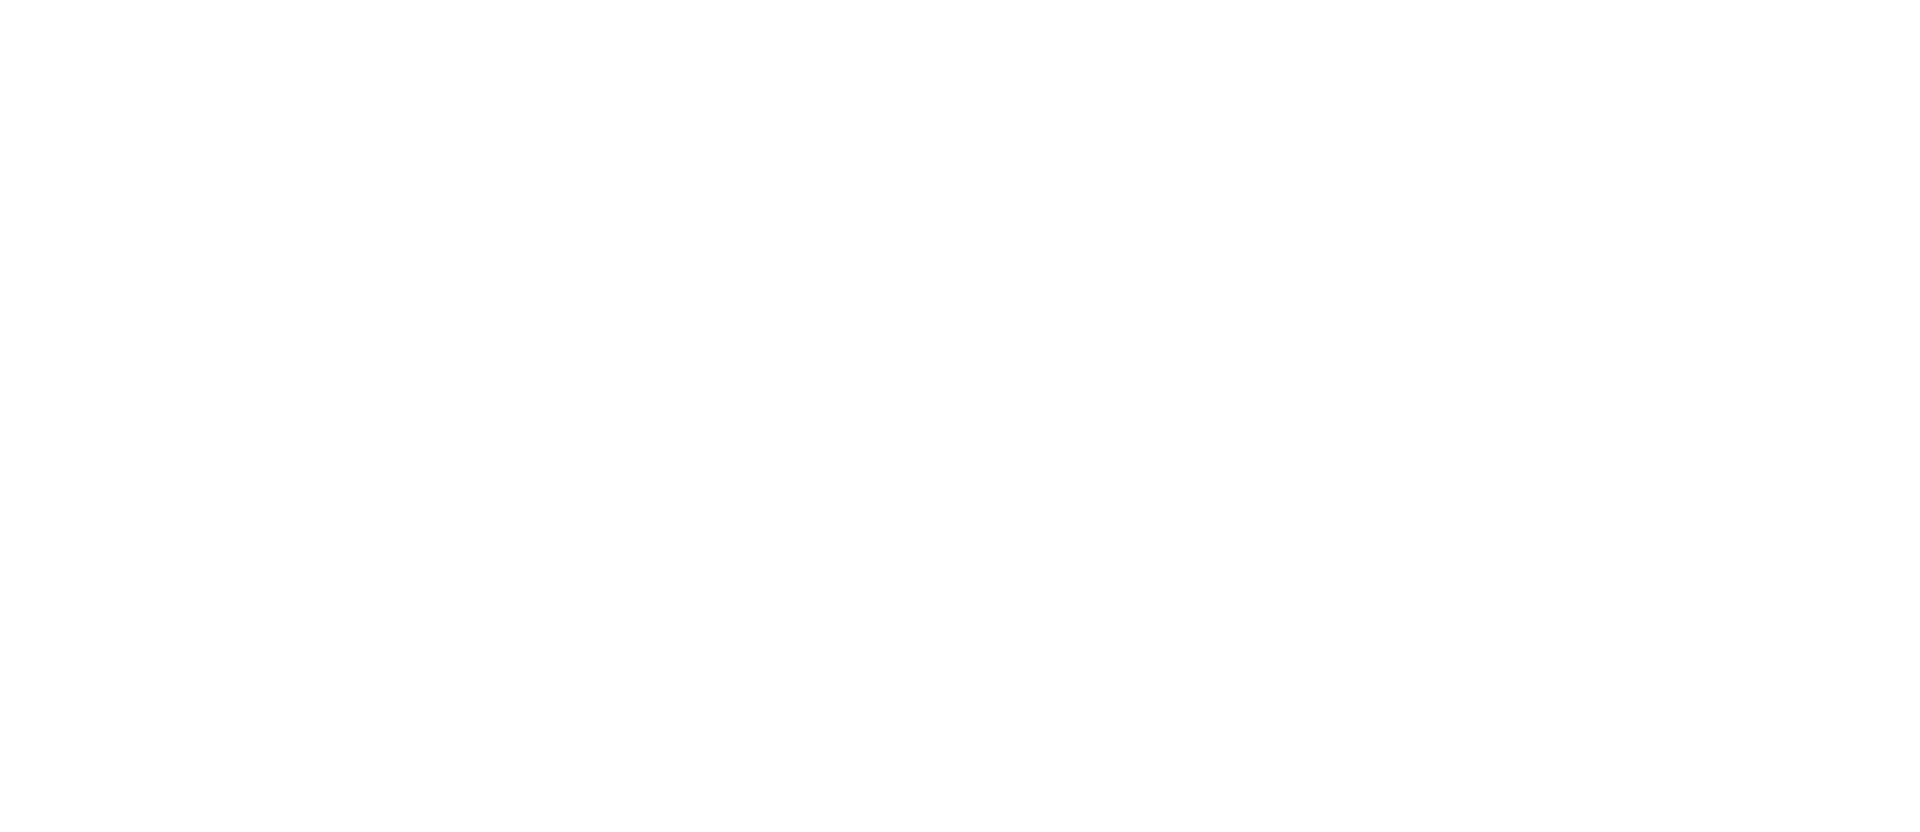 Steel Technics Logo